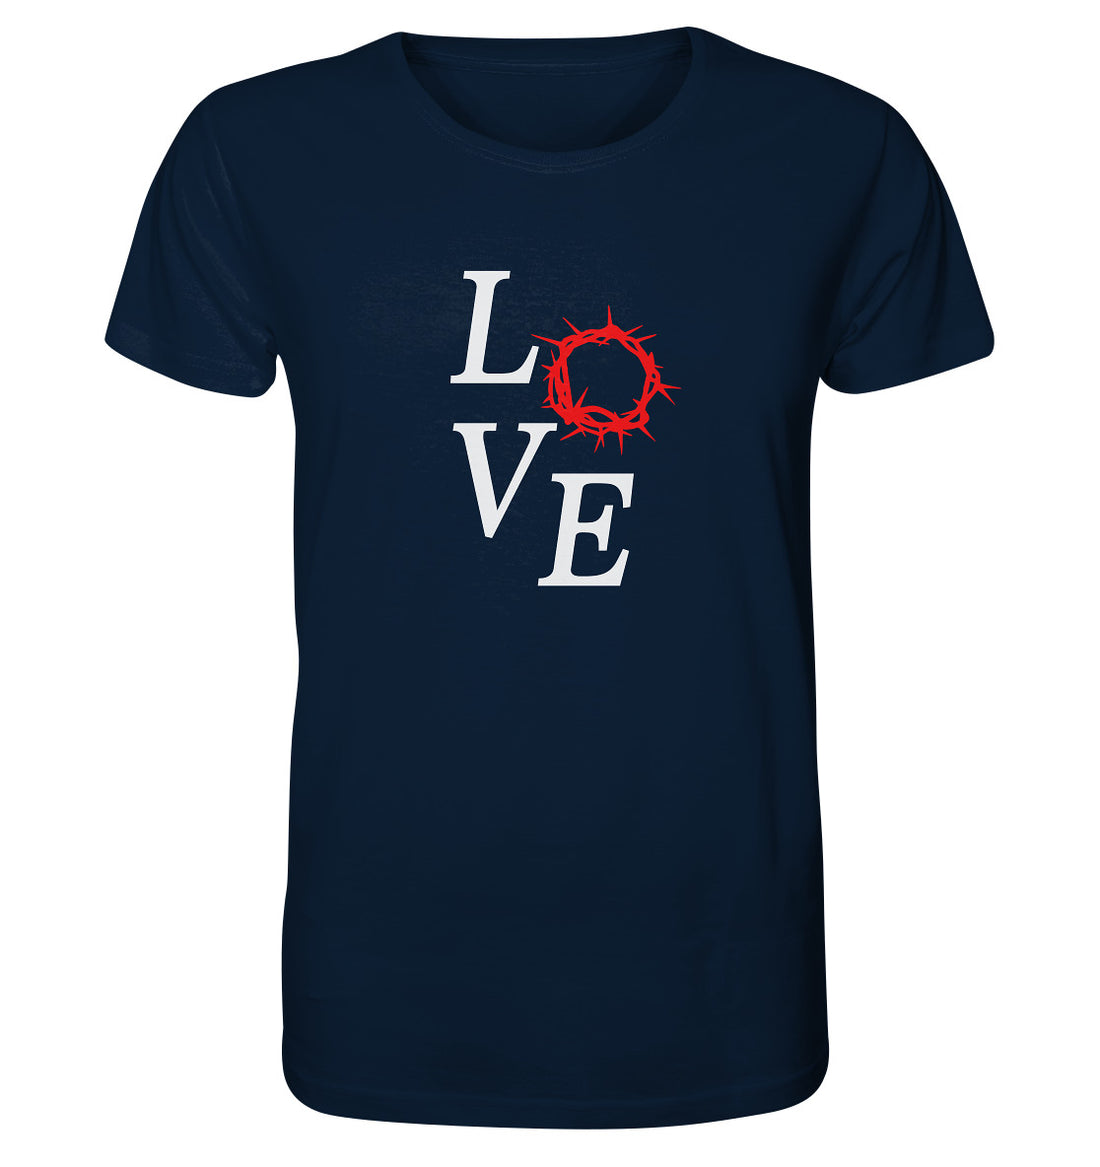 LOVE (2) - Organic Shirt